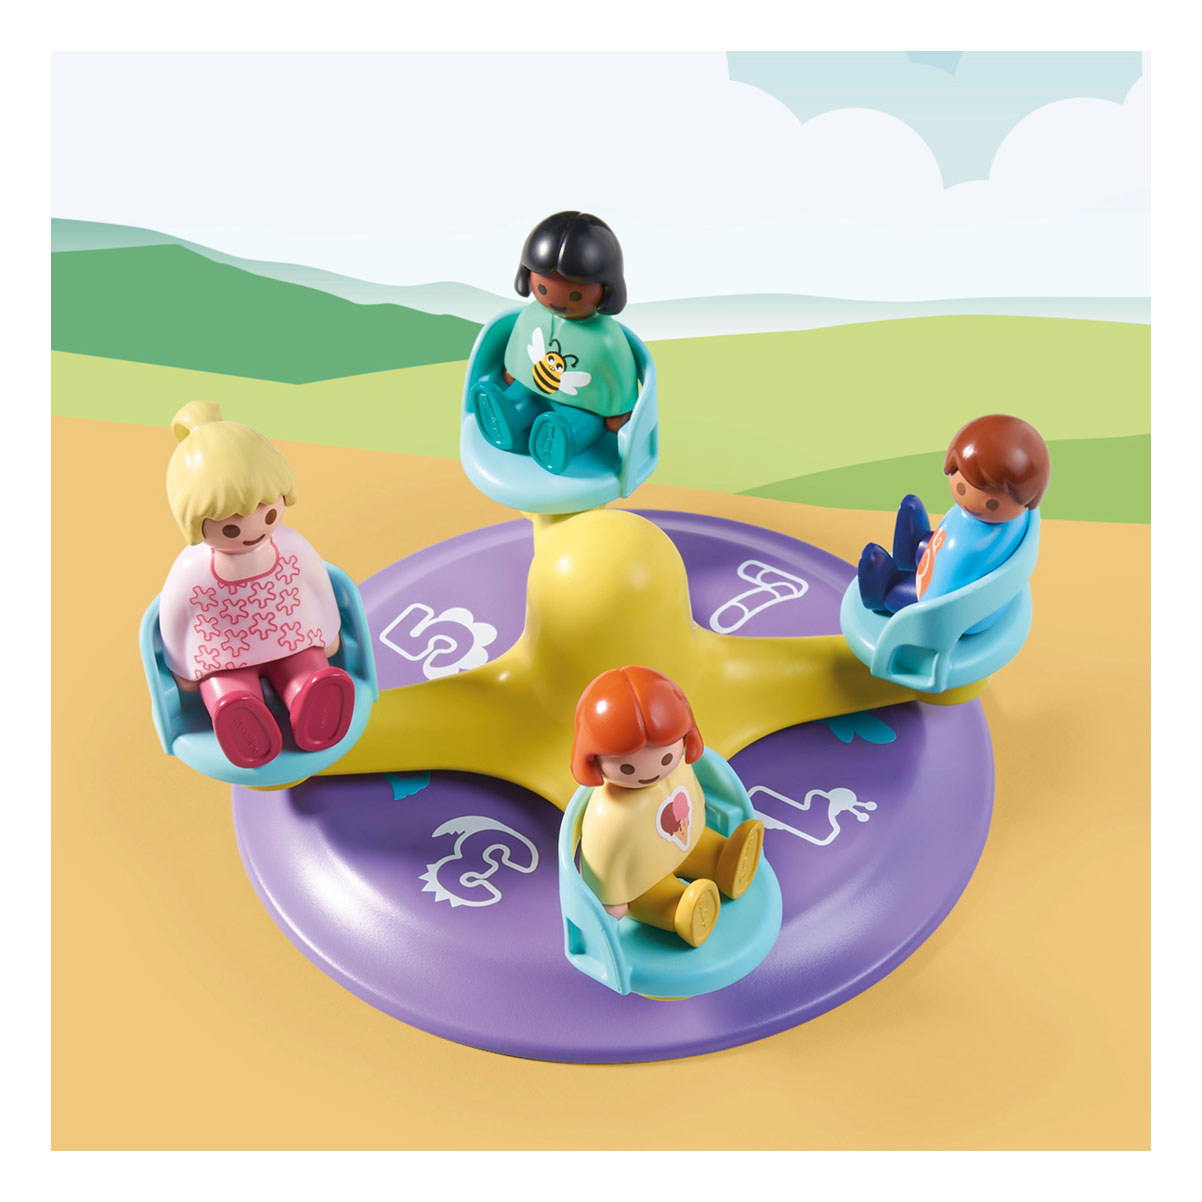 Playmobil 1.2.3. Kinderkarussell - 71324